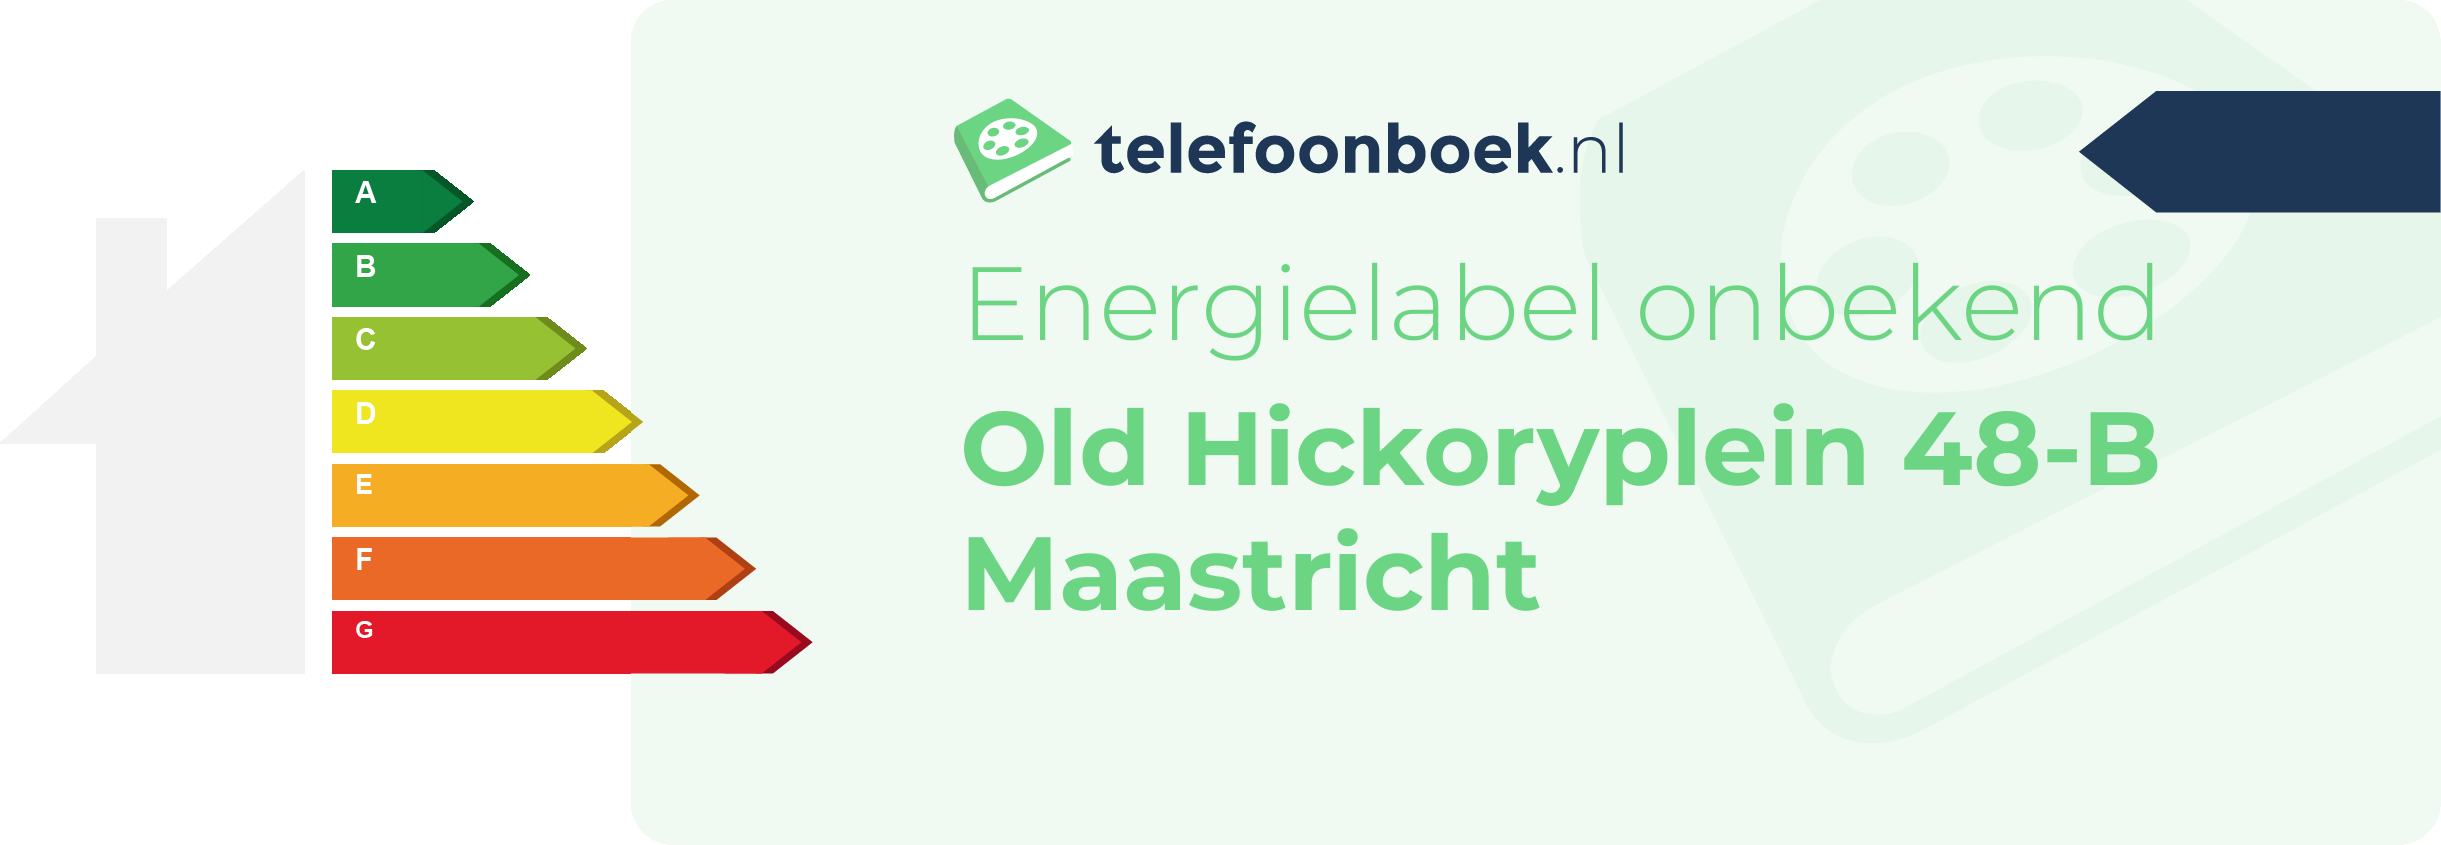 Energielabel Old Hickoryplein 48-B Maastricht